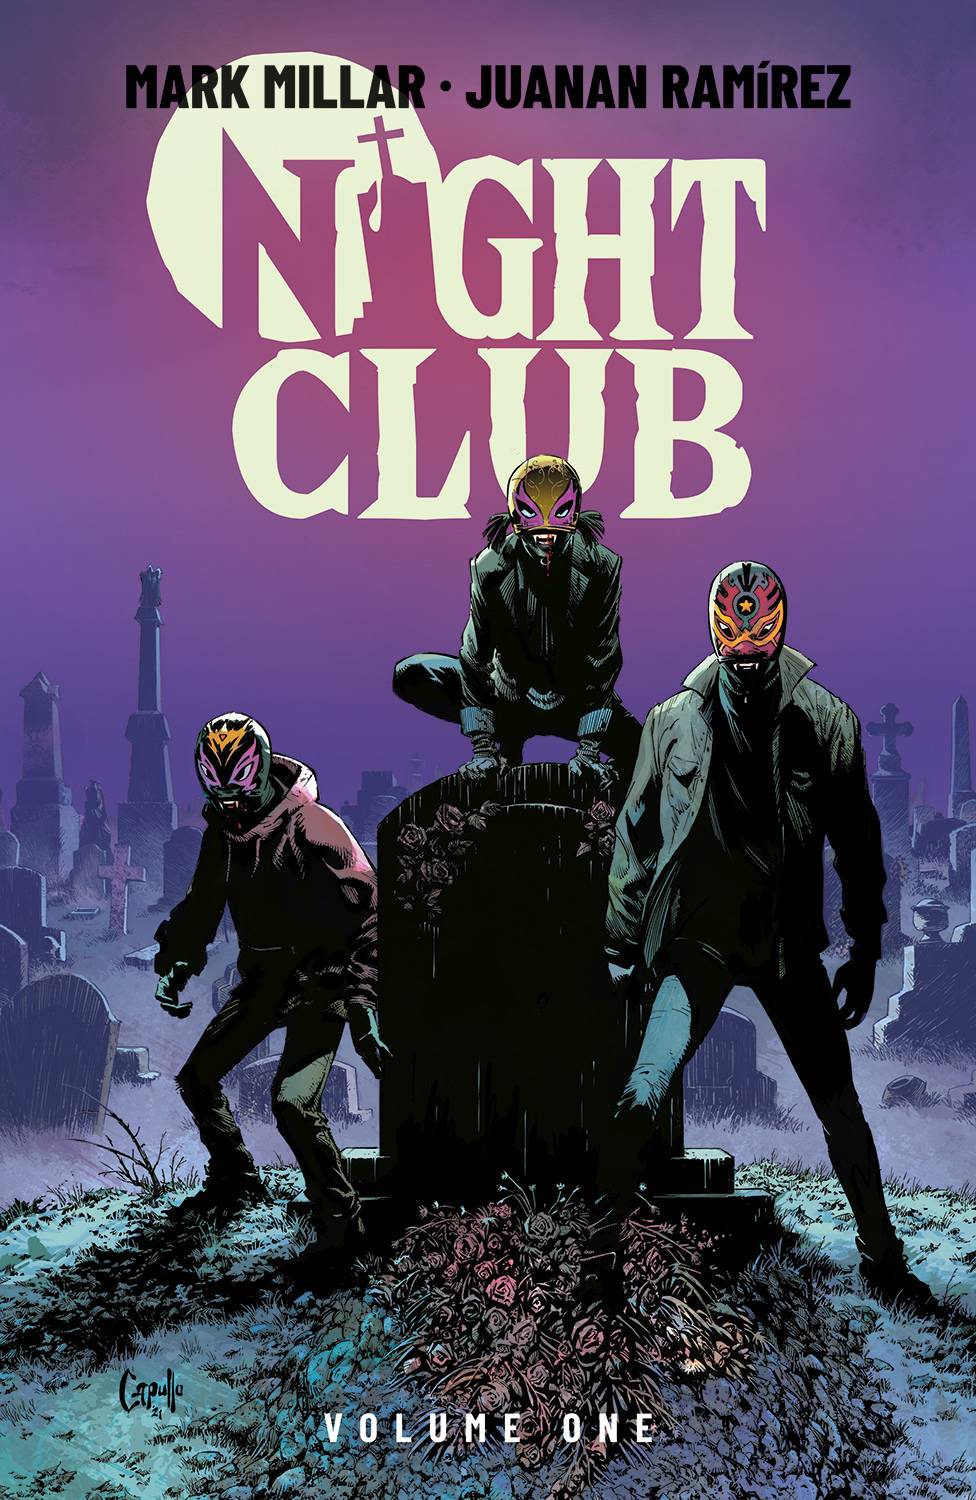 Night Club vol 1 s/c